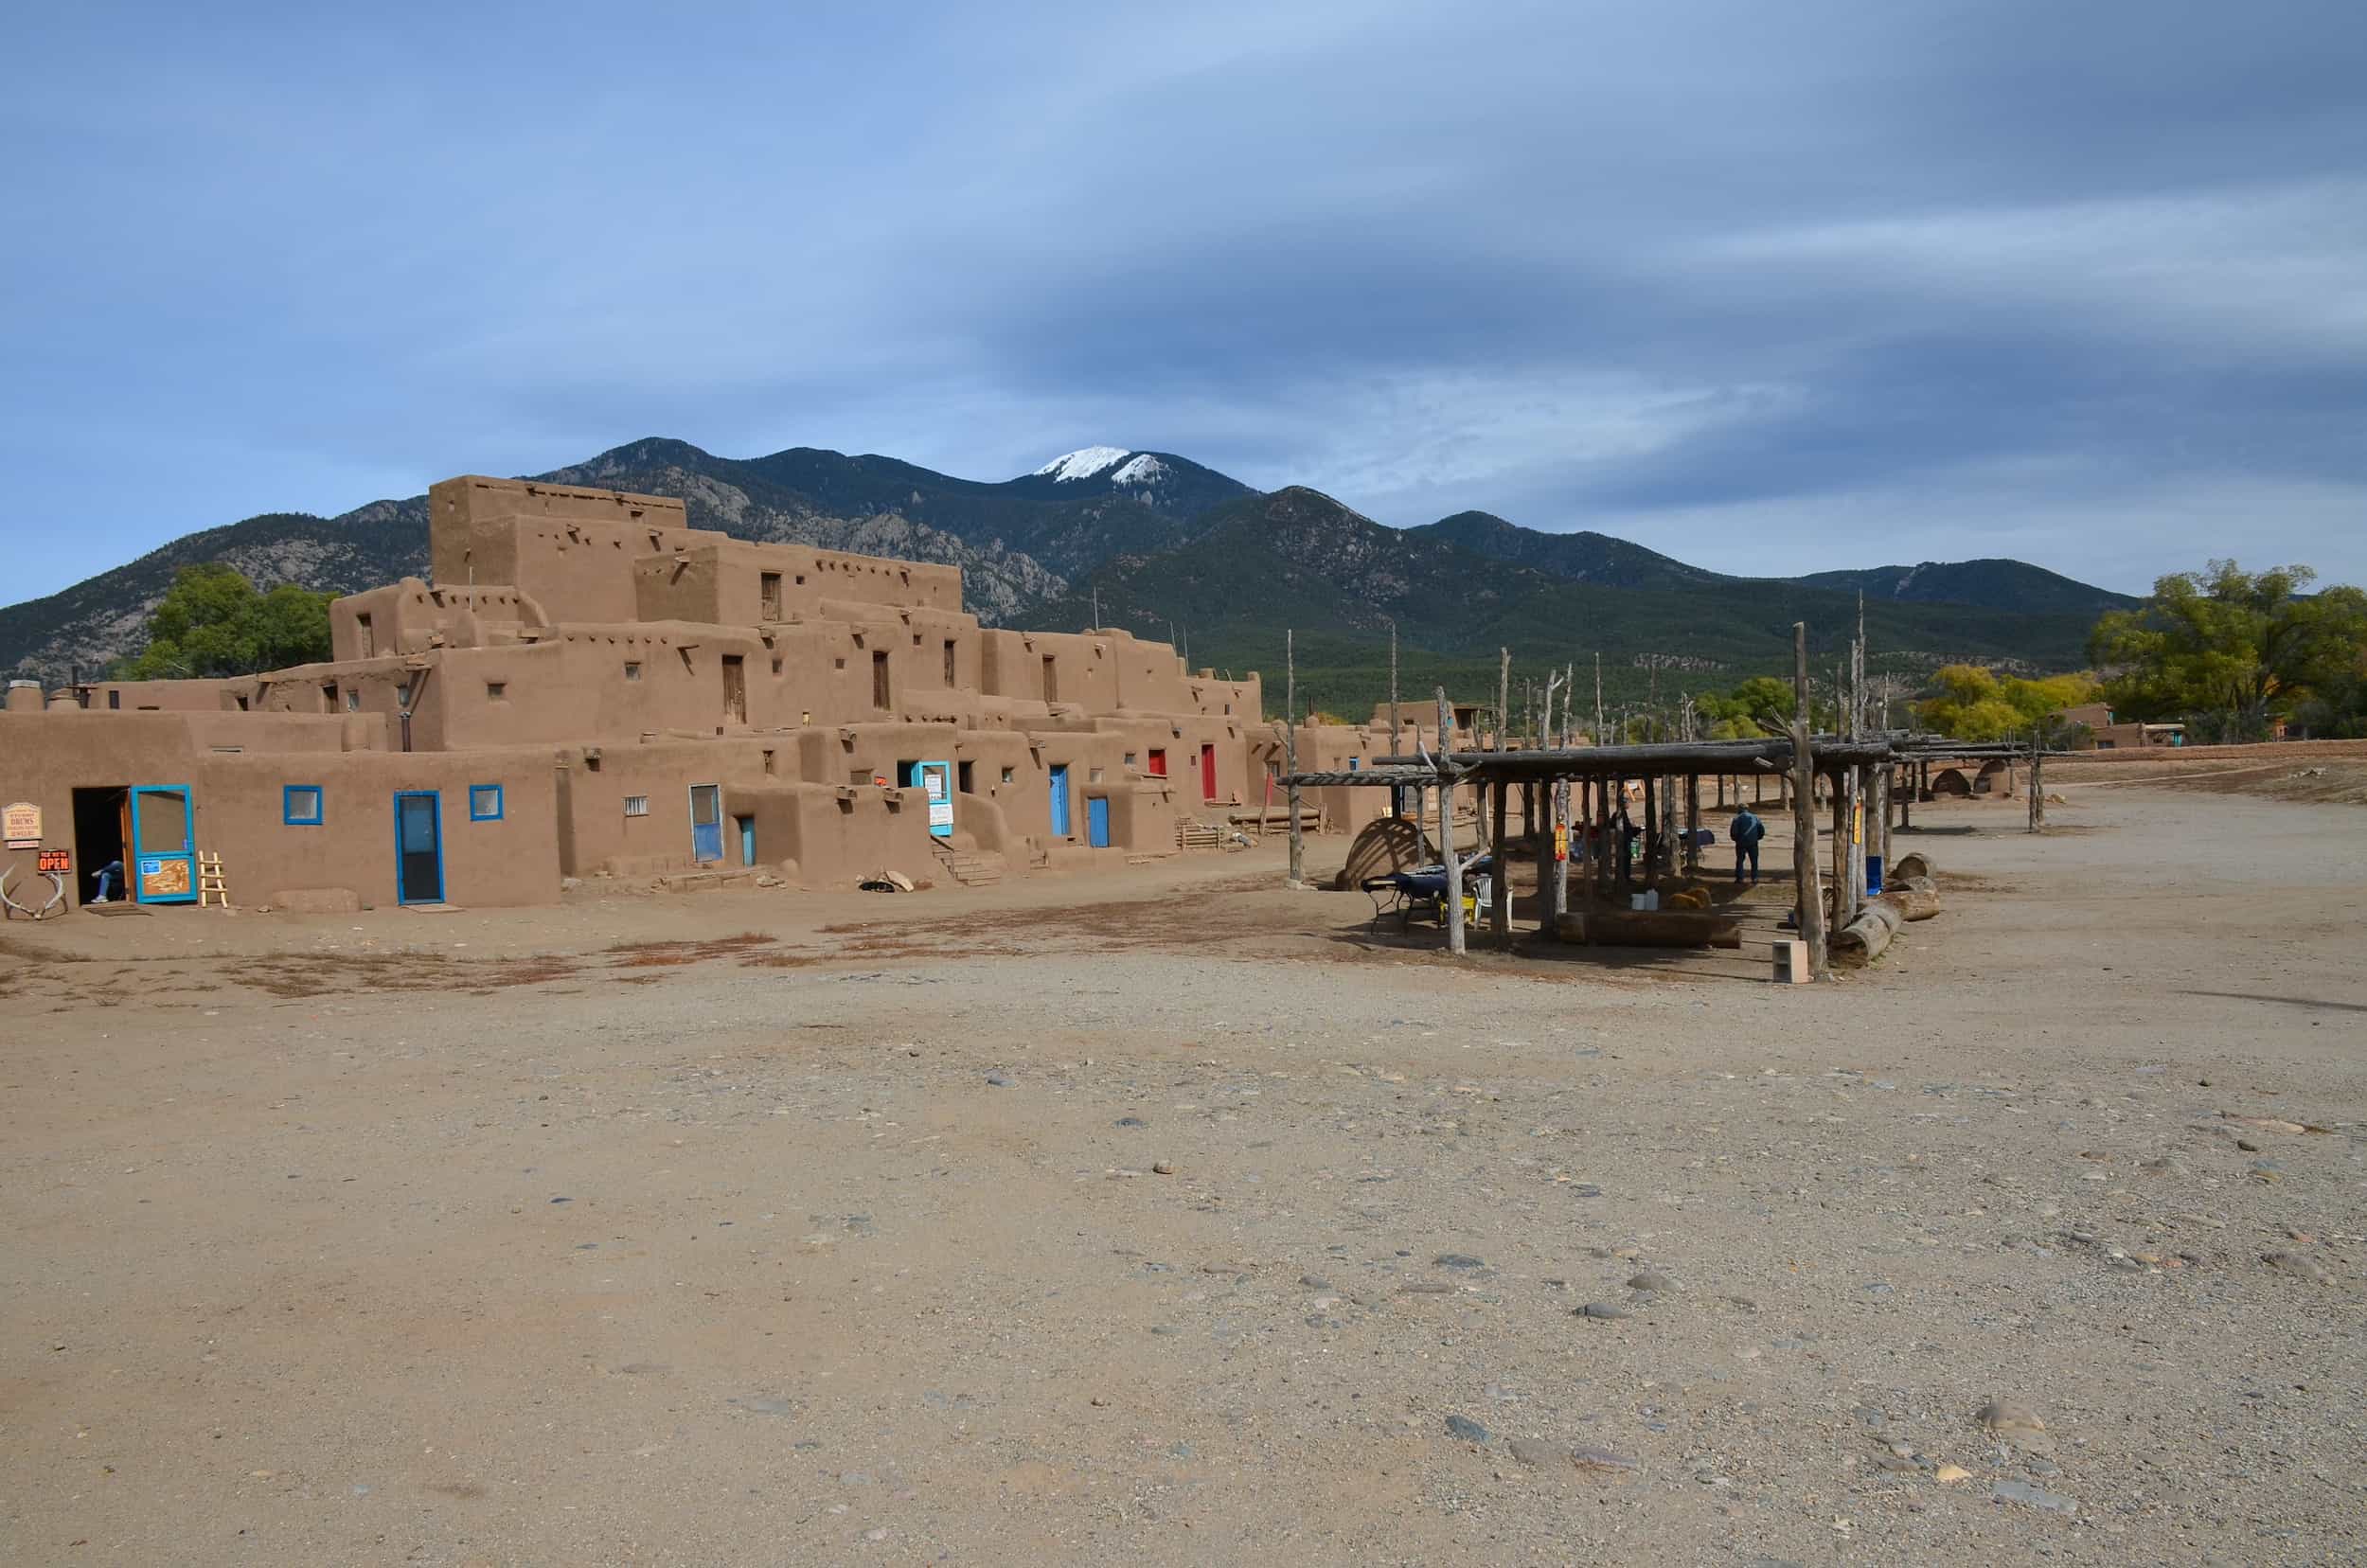 Hlauuma at Taos Pueblo in Taos, New Mexico